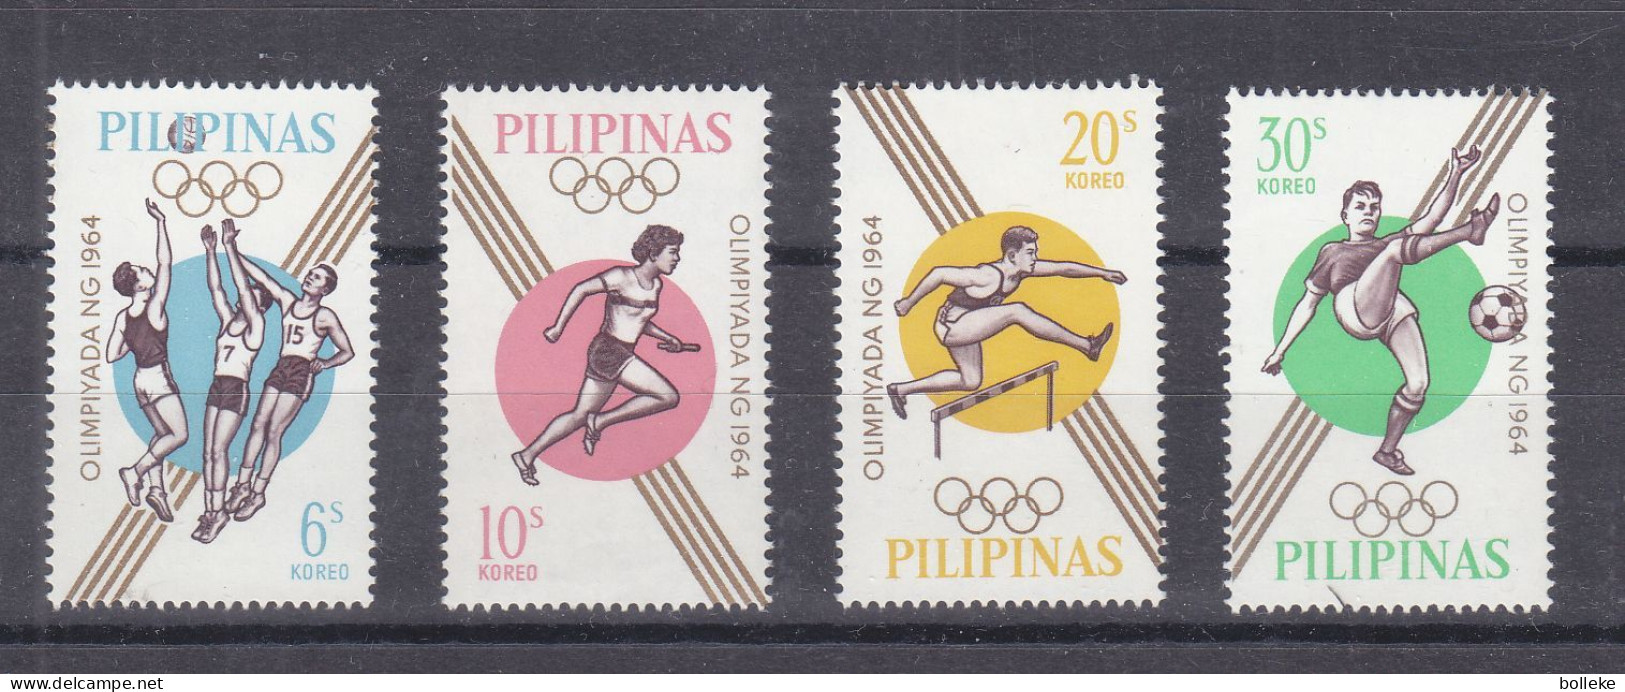 Jeux Oyimpiques - Tokyo 64 - Philippines - Yvert 605 / 8 ** -basket Ball - Haies - Football - Valeur 2,25 Euros - Summer 1964: Tokyo